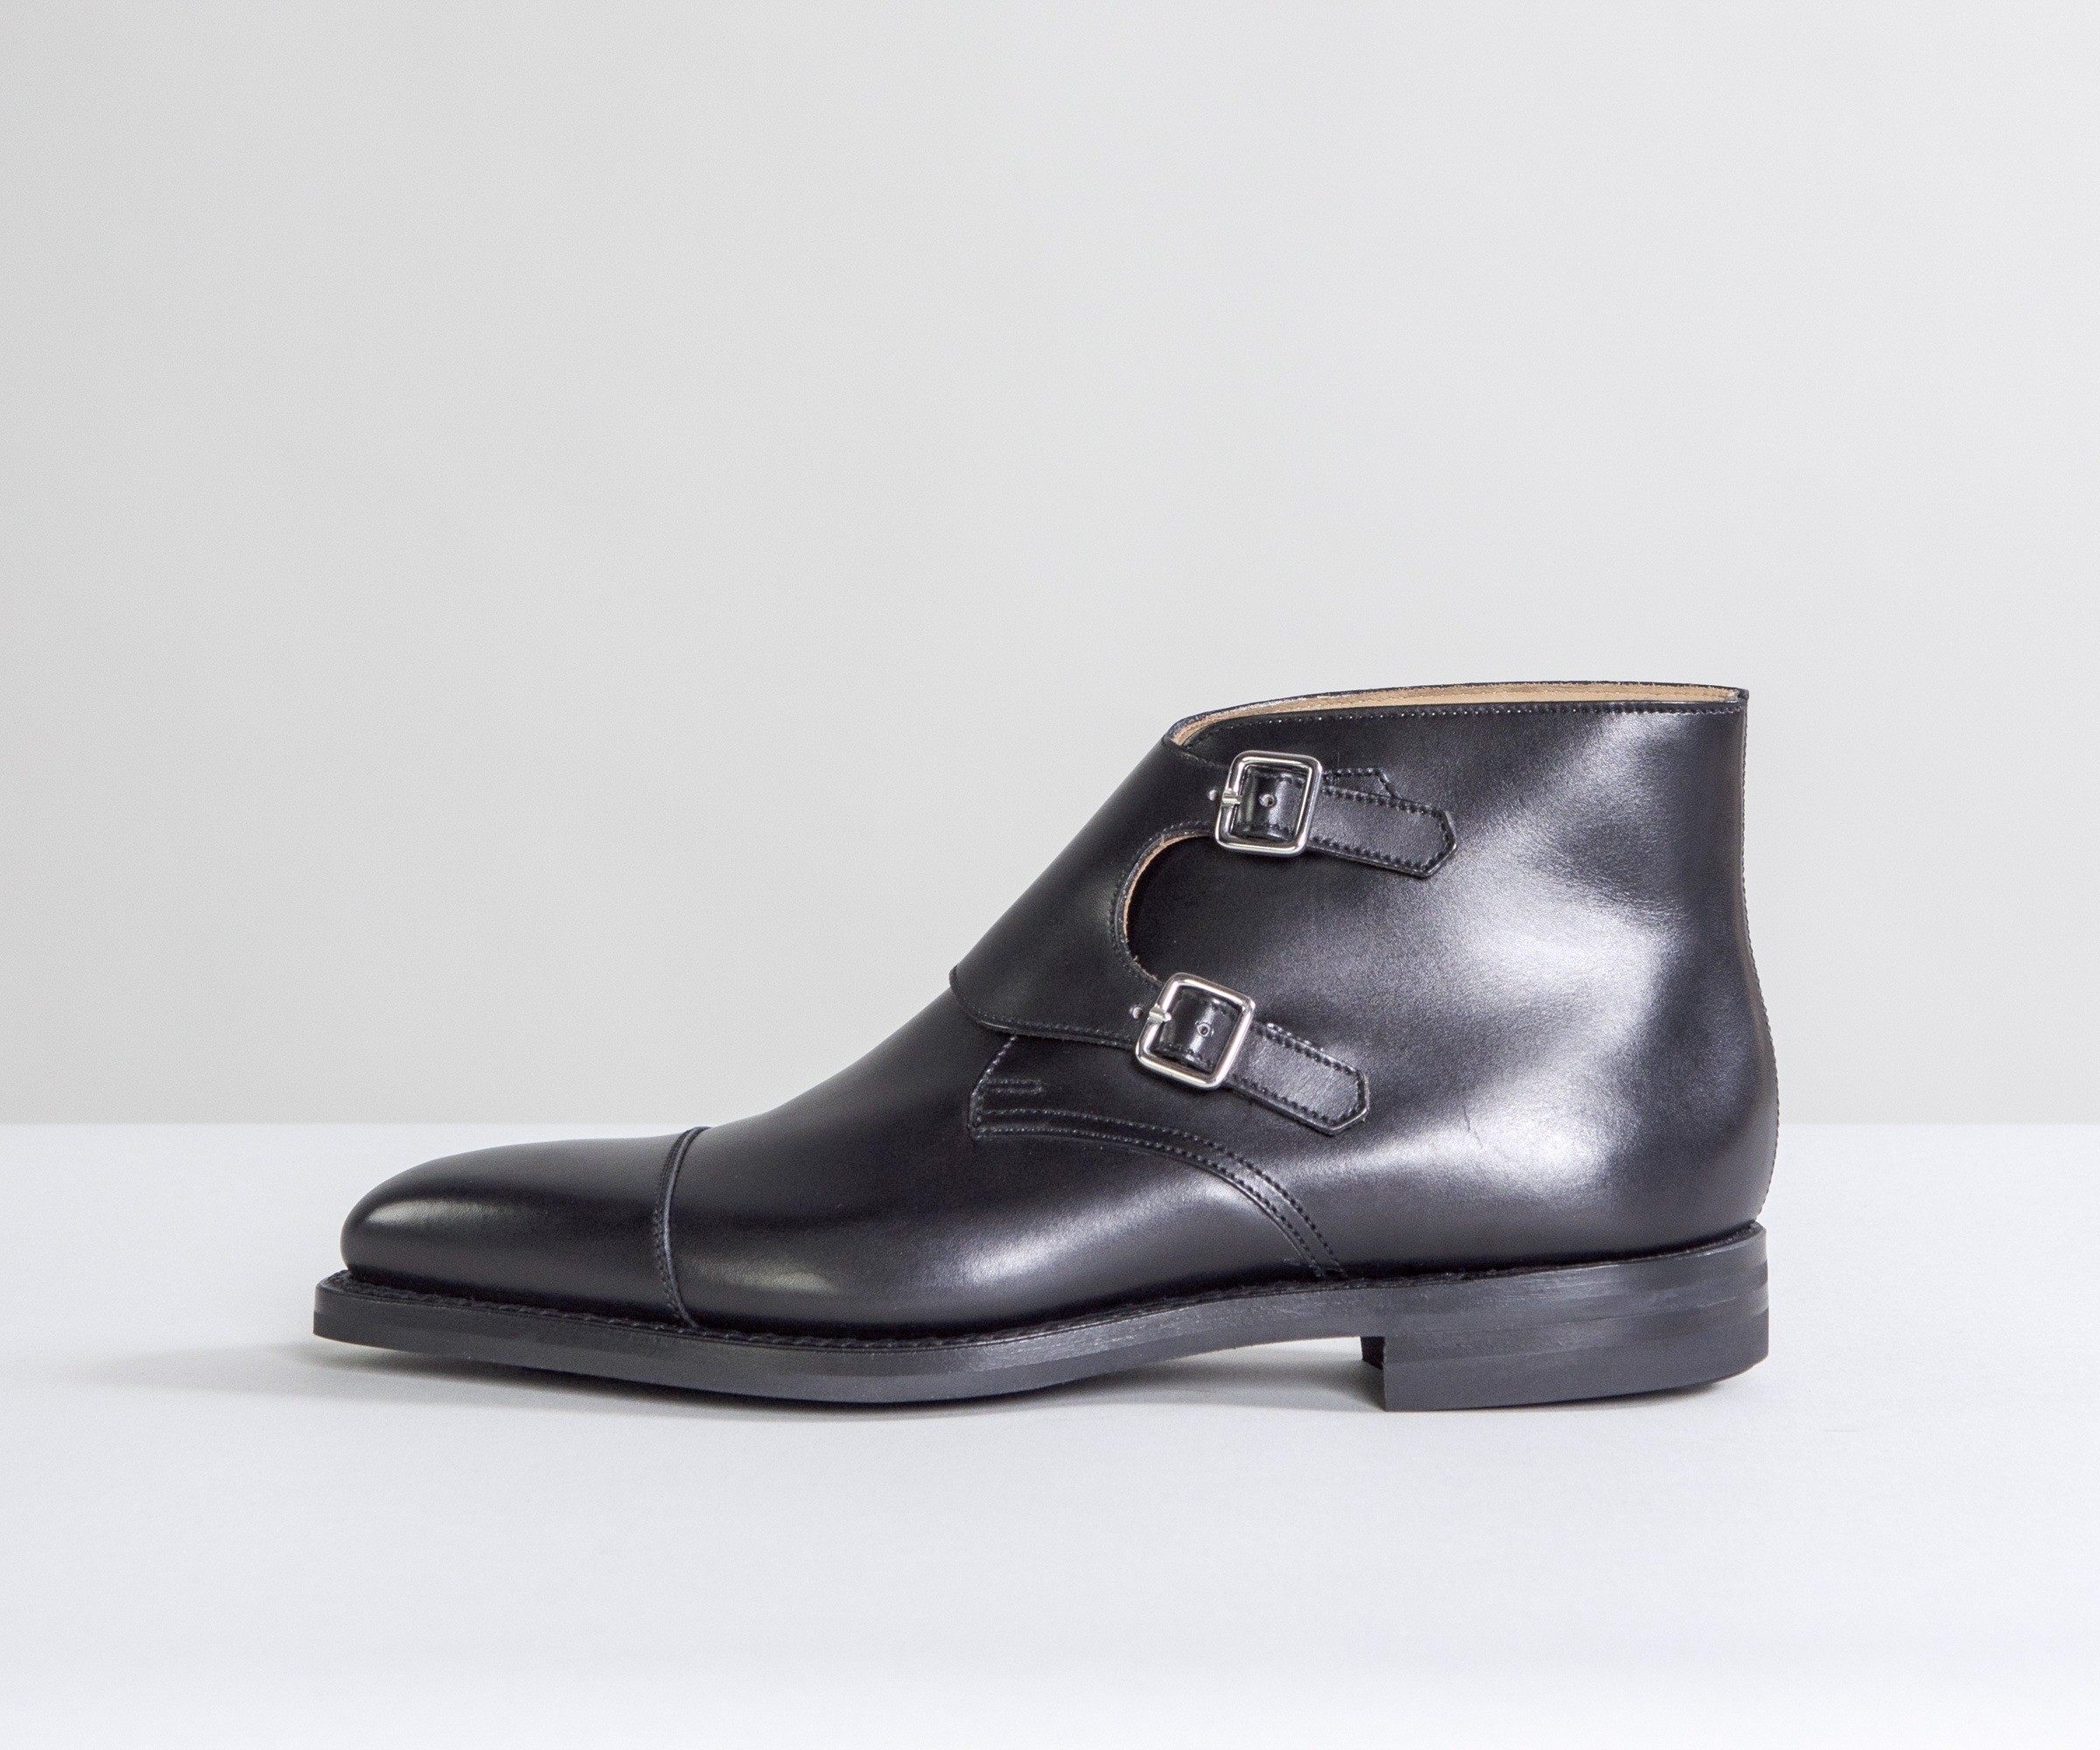 Crockett & Jones 'Camberley' Calf Leather Boots Black